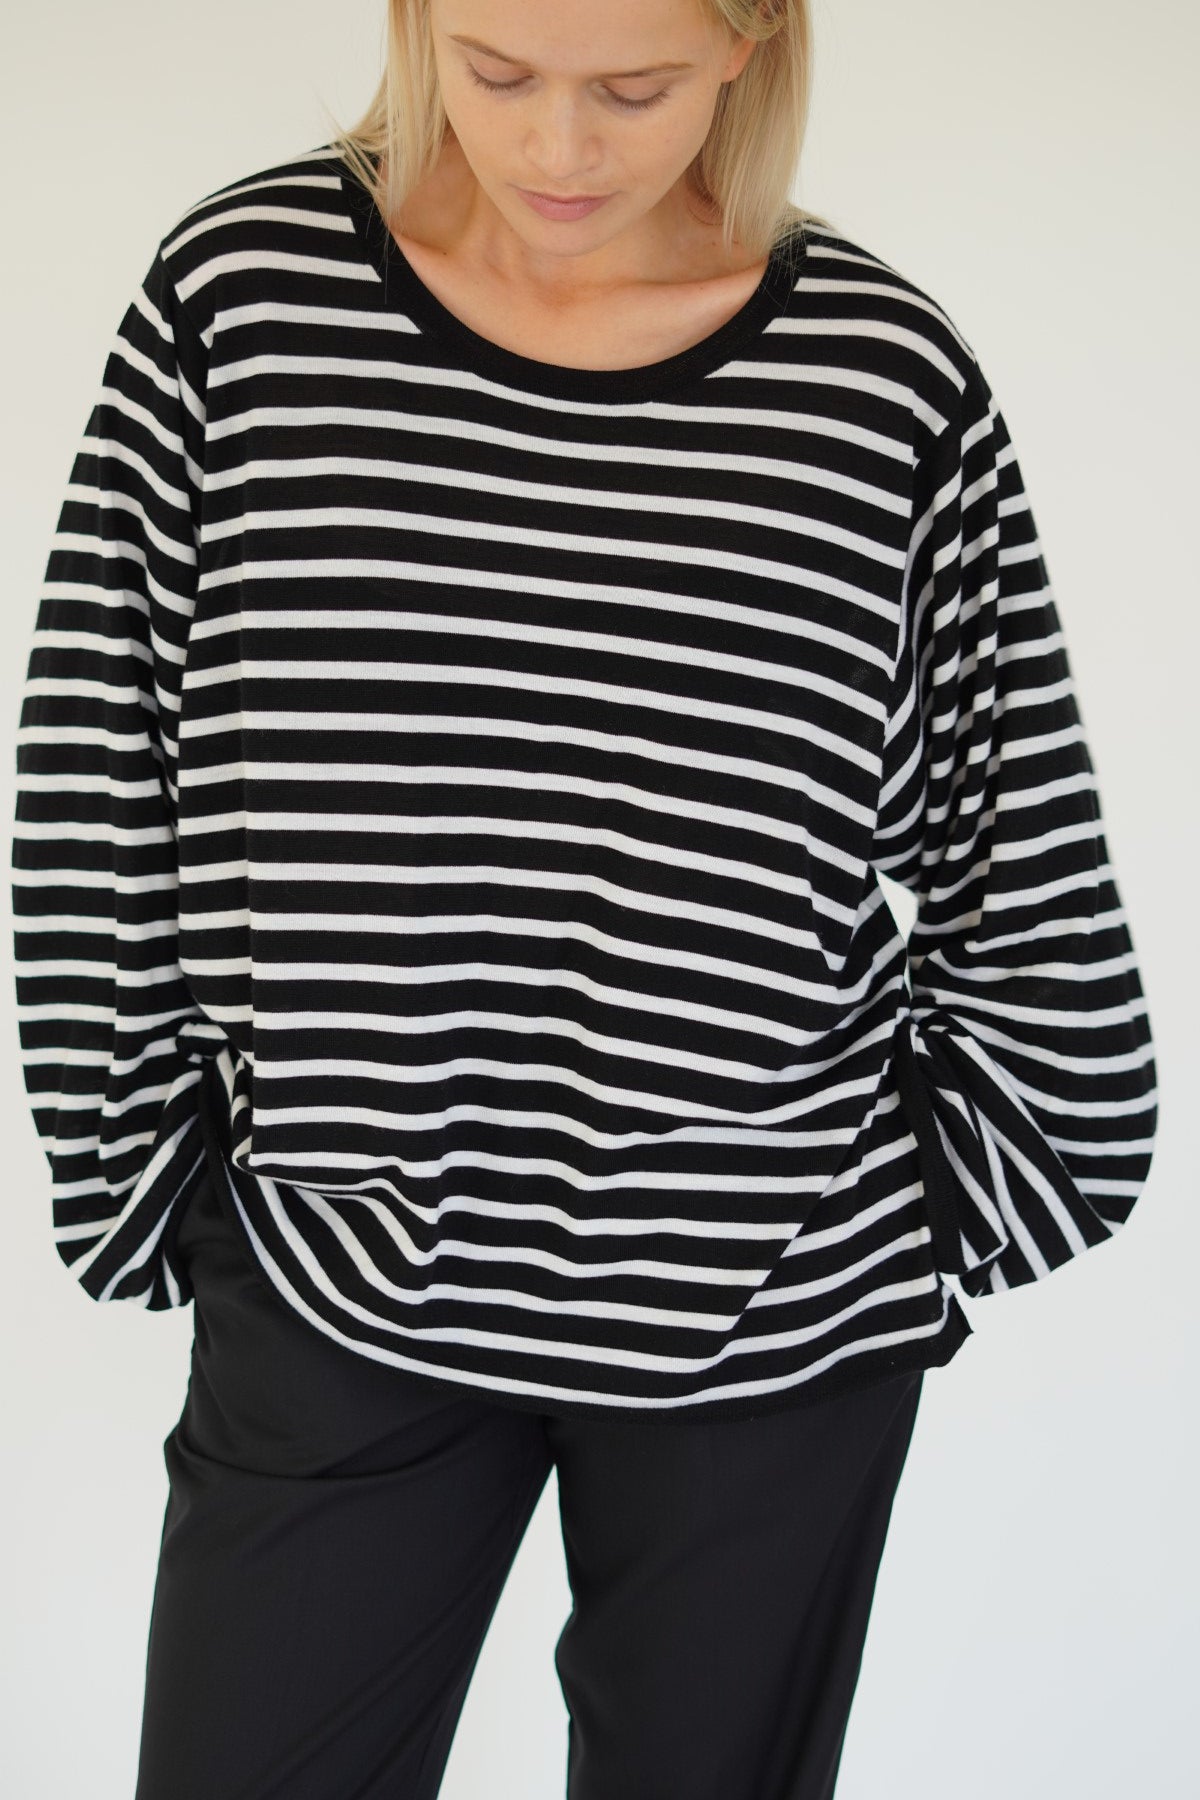 Wool sweater black stripes